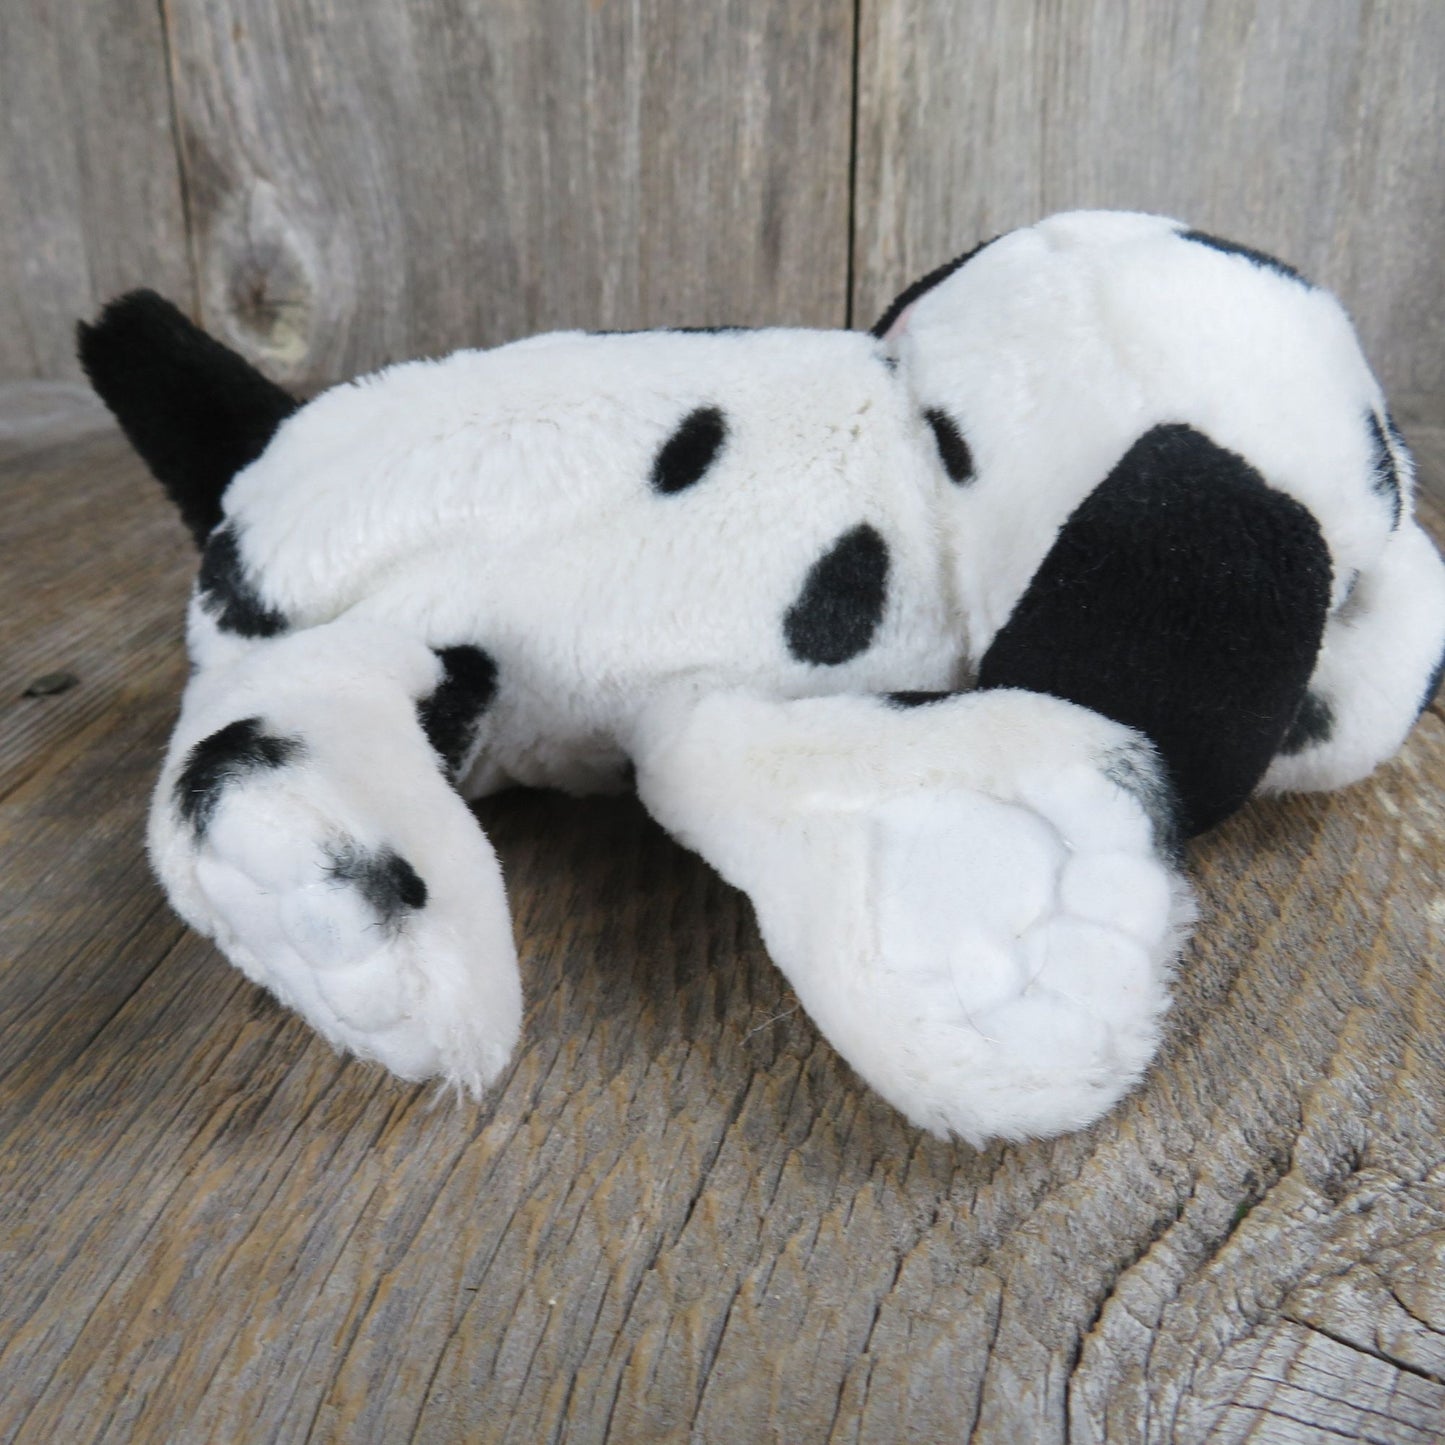 Dalmatian Dog Plush Squeaker Toy White Black Spots Polka Dots Bean Bag Stuffed Animal Weighted